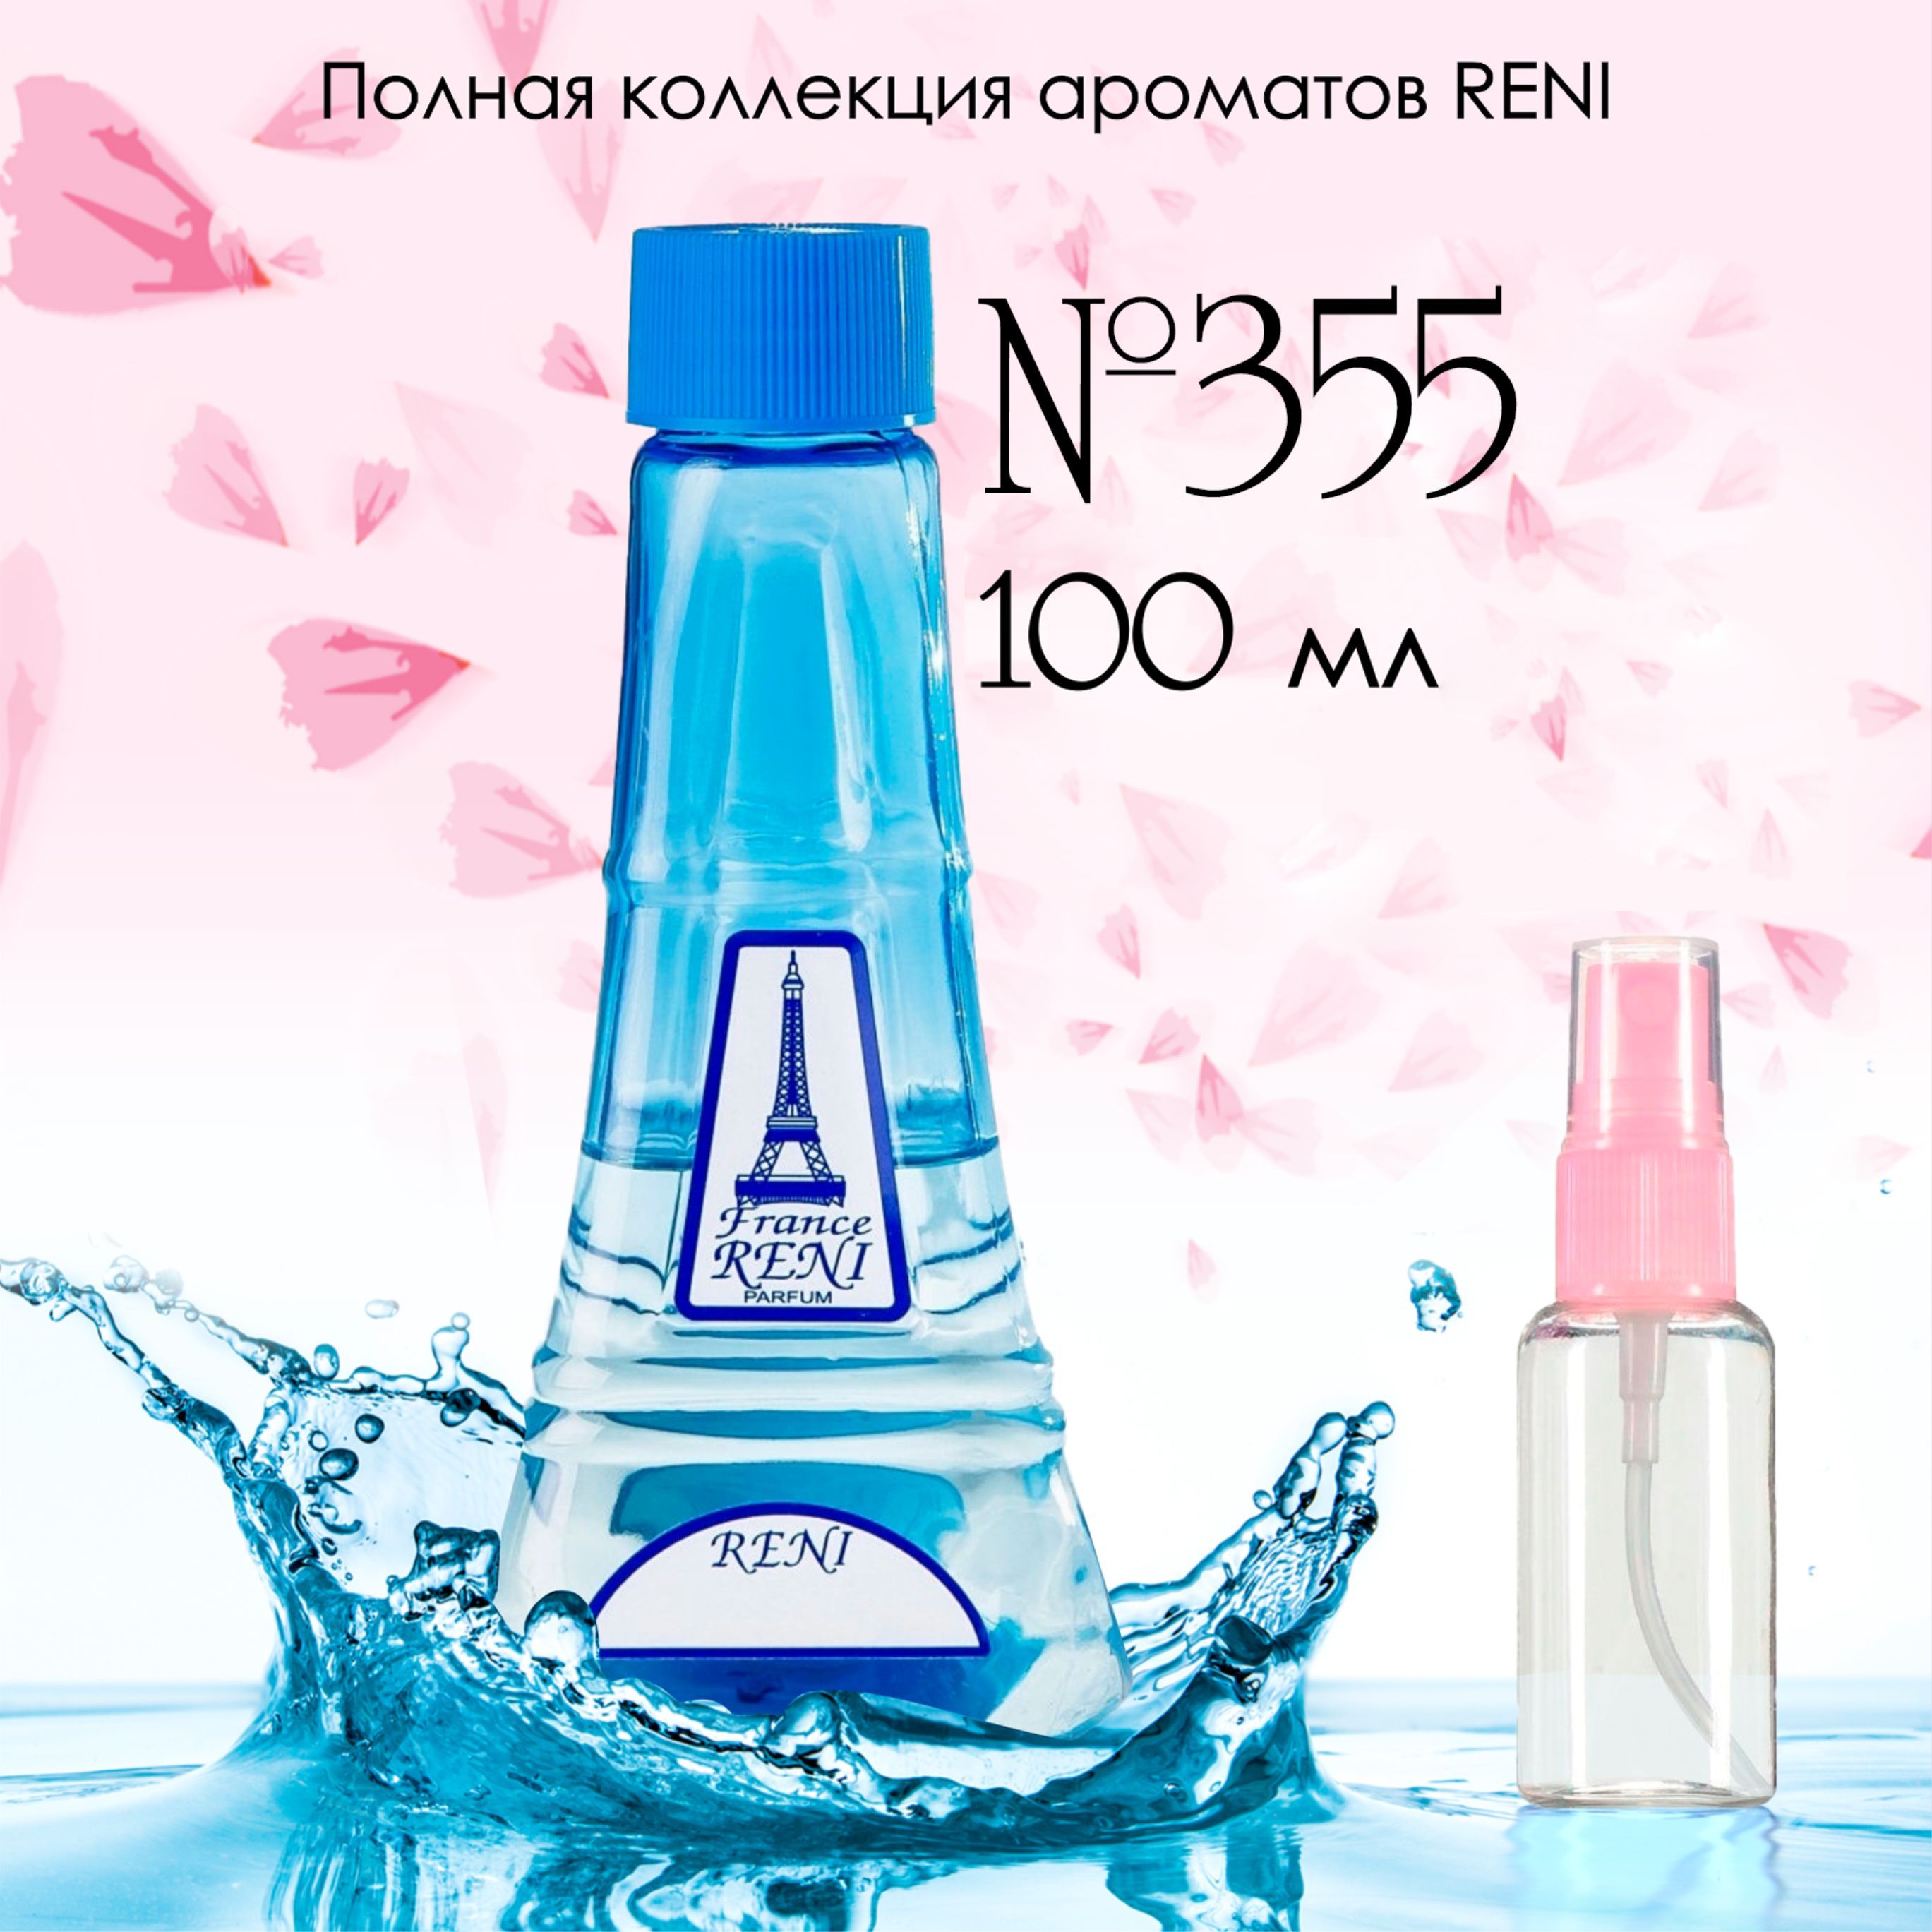 Рени р. Reni 398. Рени 223 наливная парфюмерия Reni Parfum. Reni 334 наливная парфюмерия Рени. Духи Рени 439.